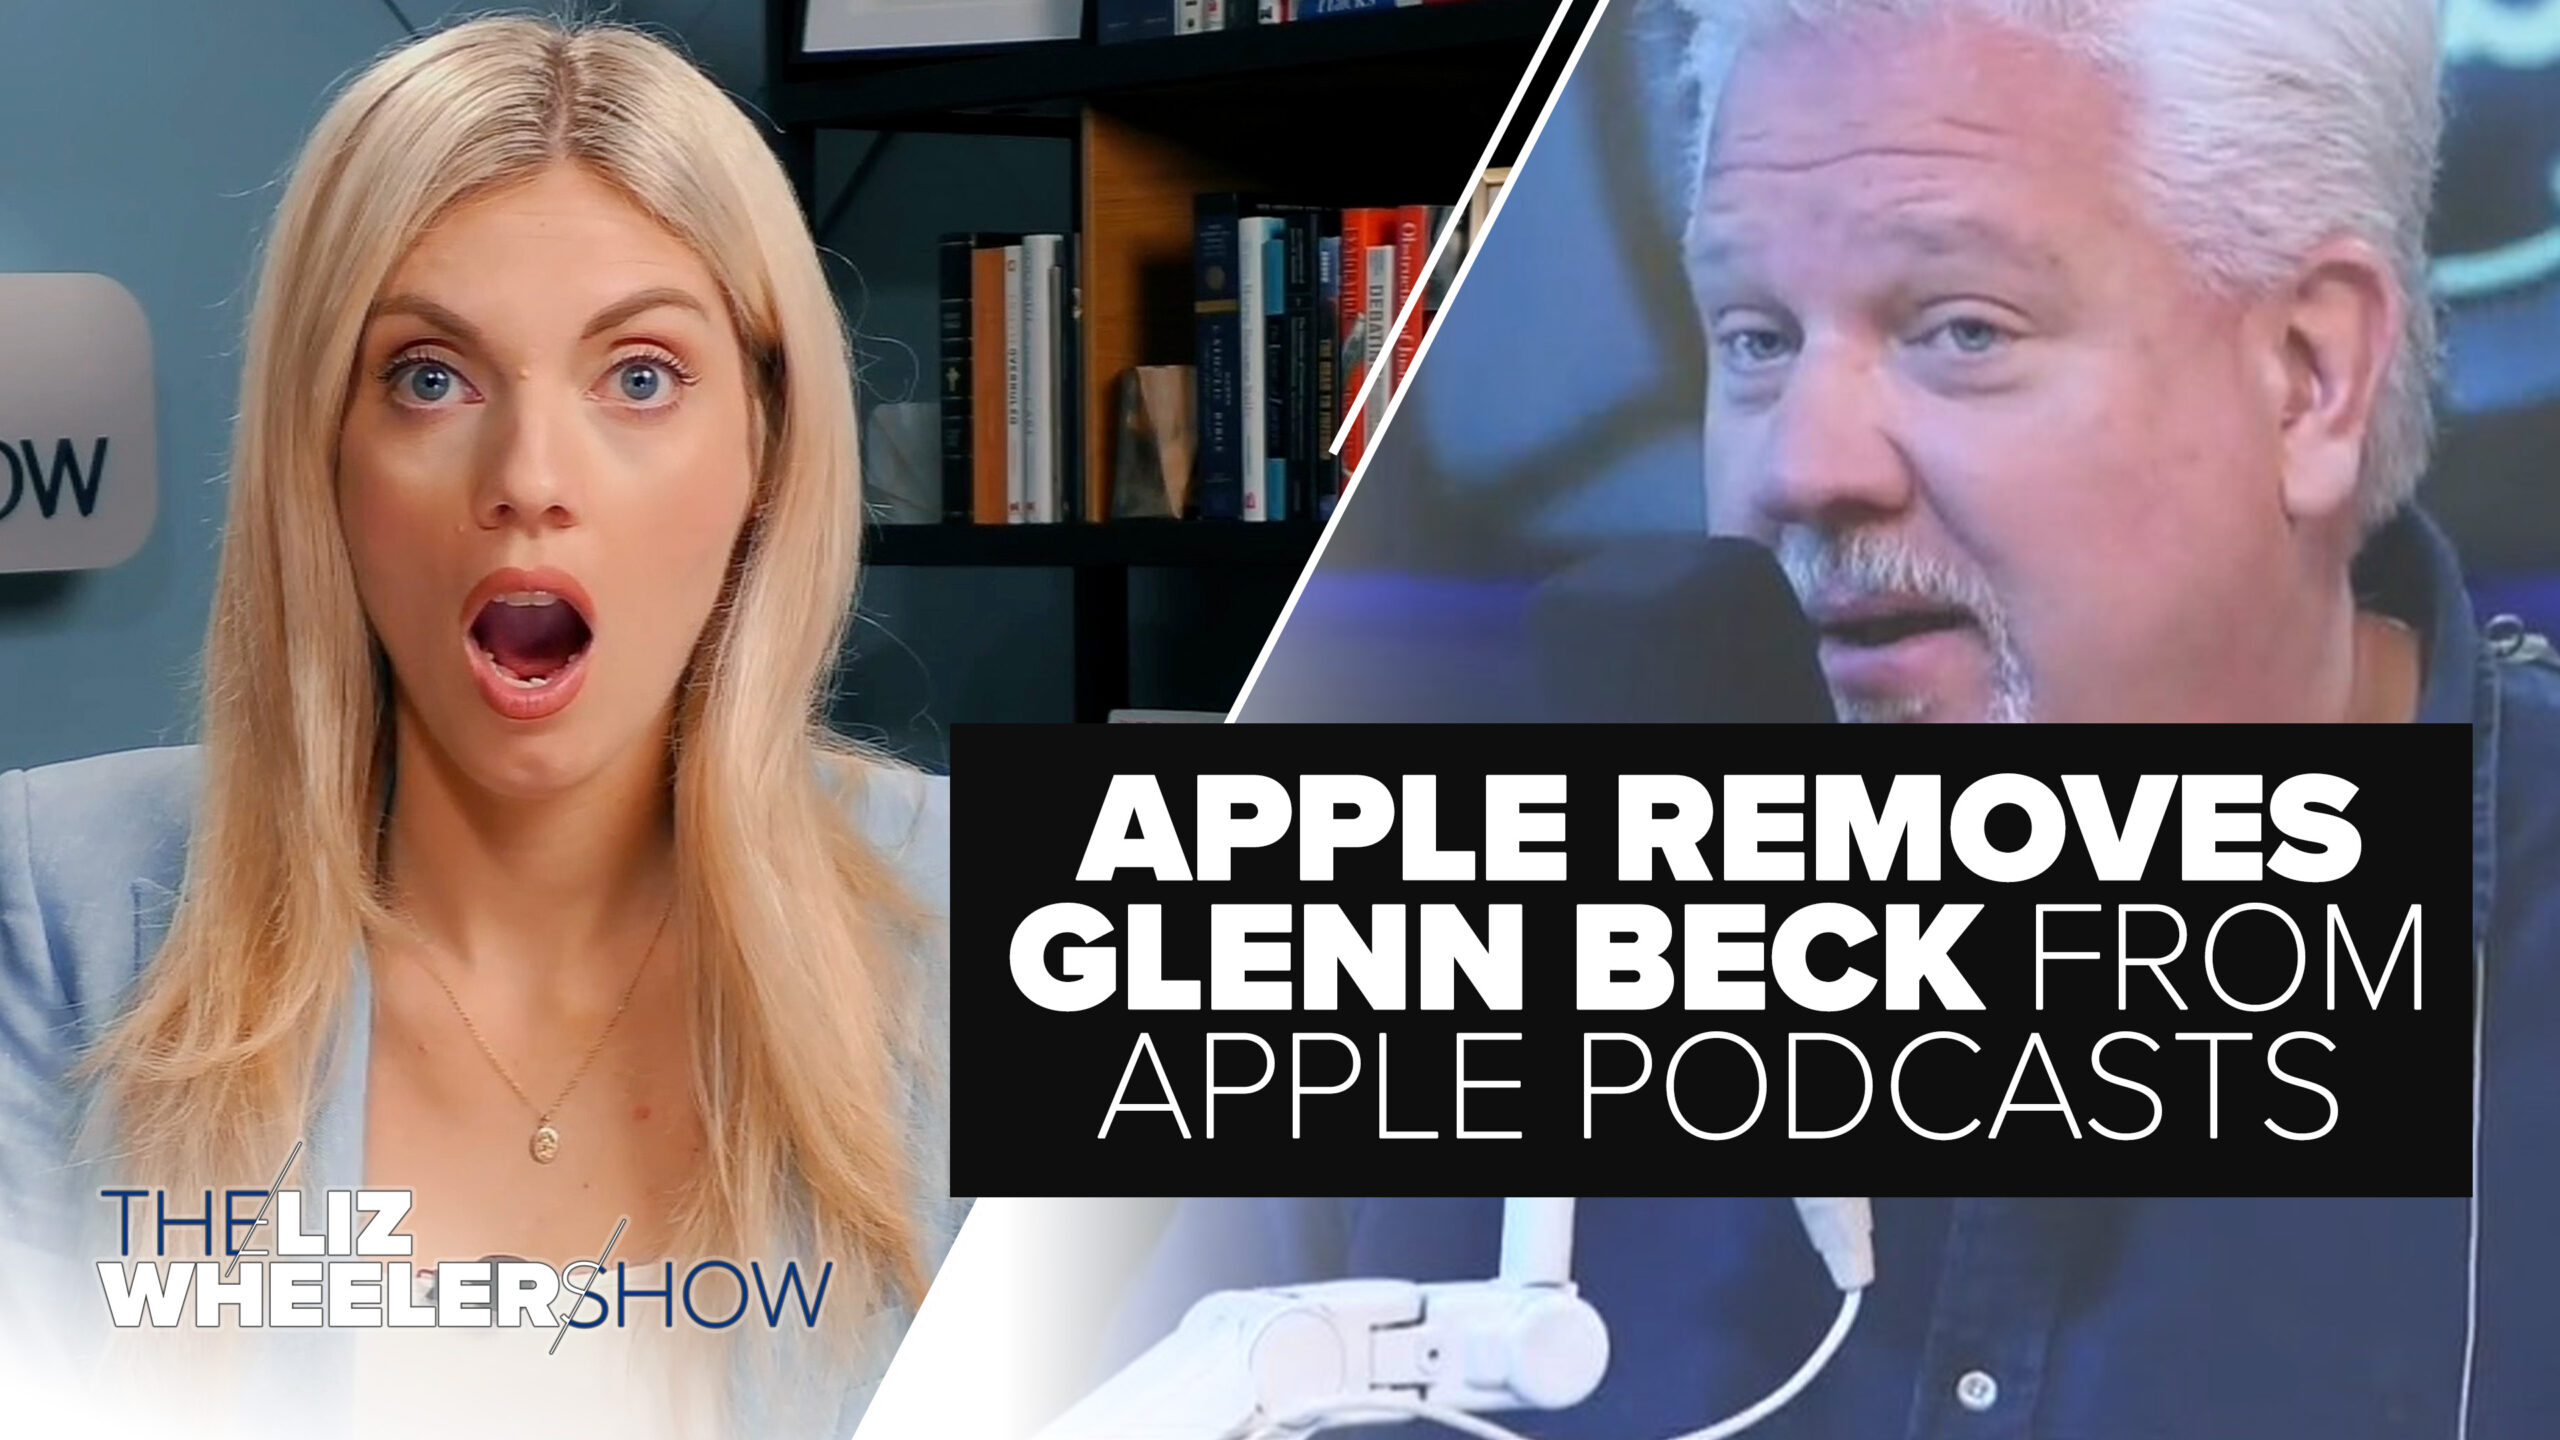 Glenn Beck appears speaking on his podcast show.